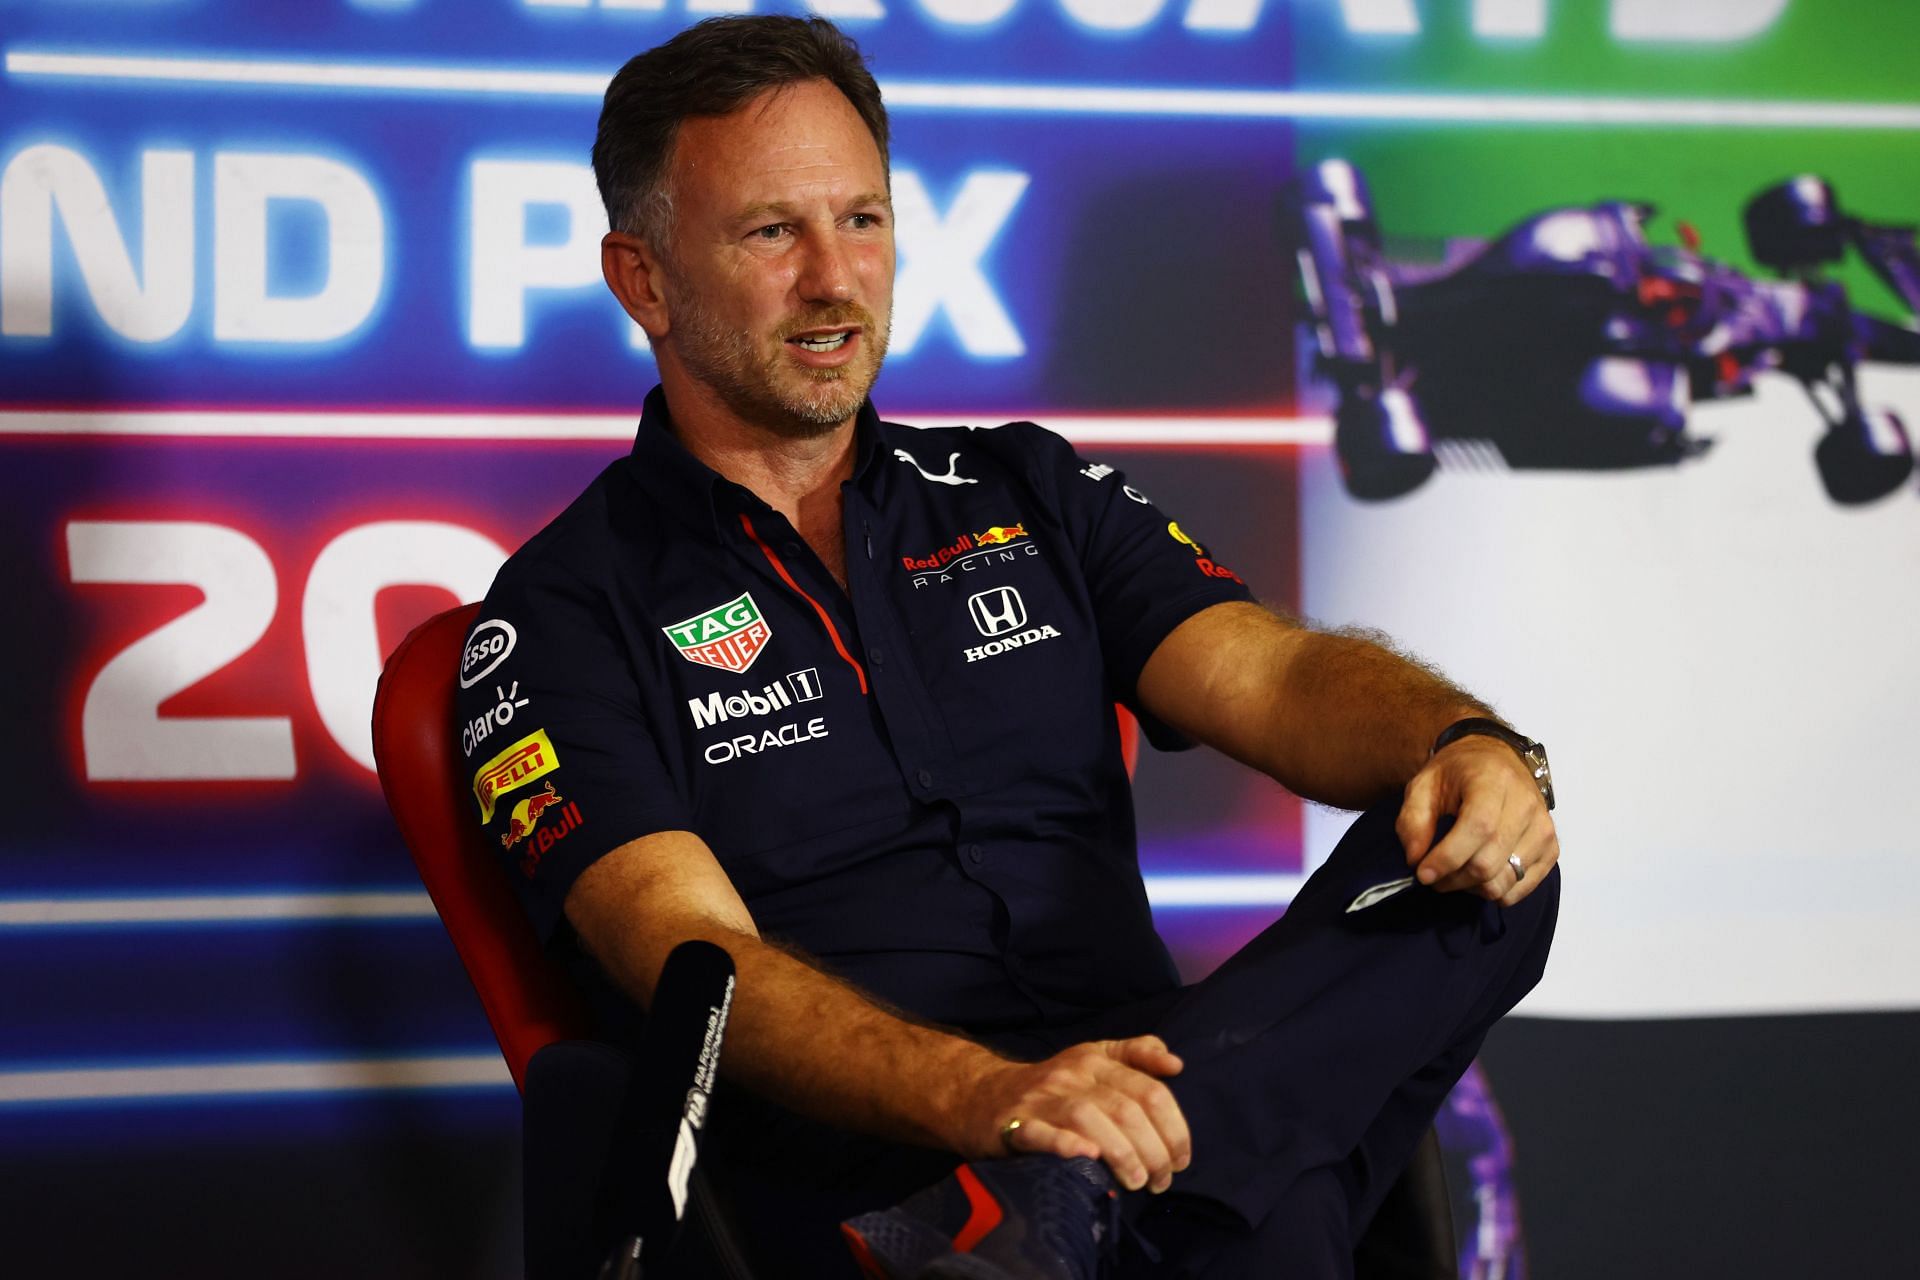 Christian Horner, Red Bull team principal, at the F1 Grand Prix of Abu Dhabi